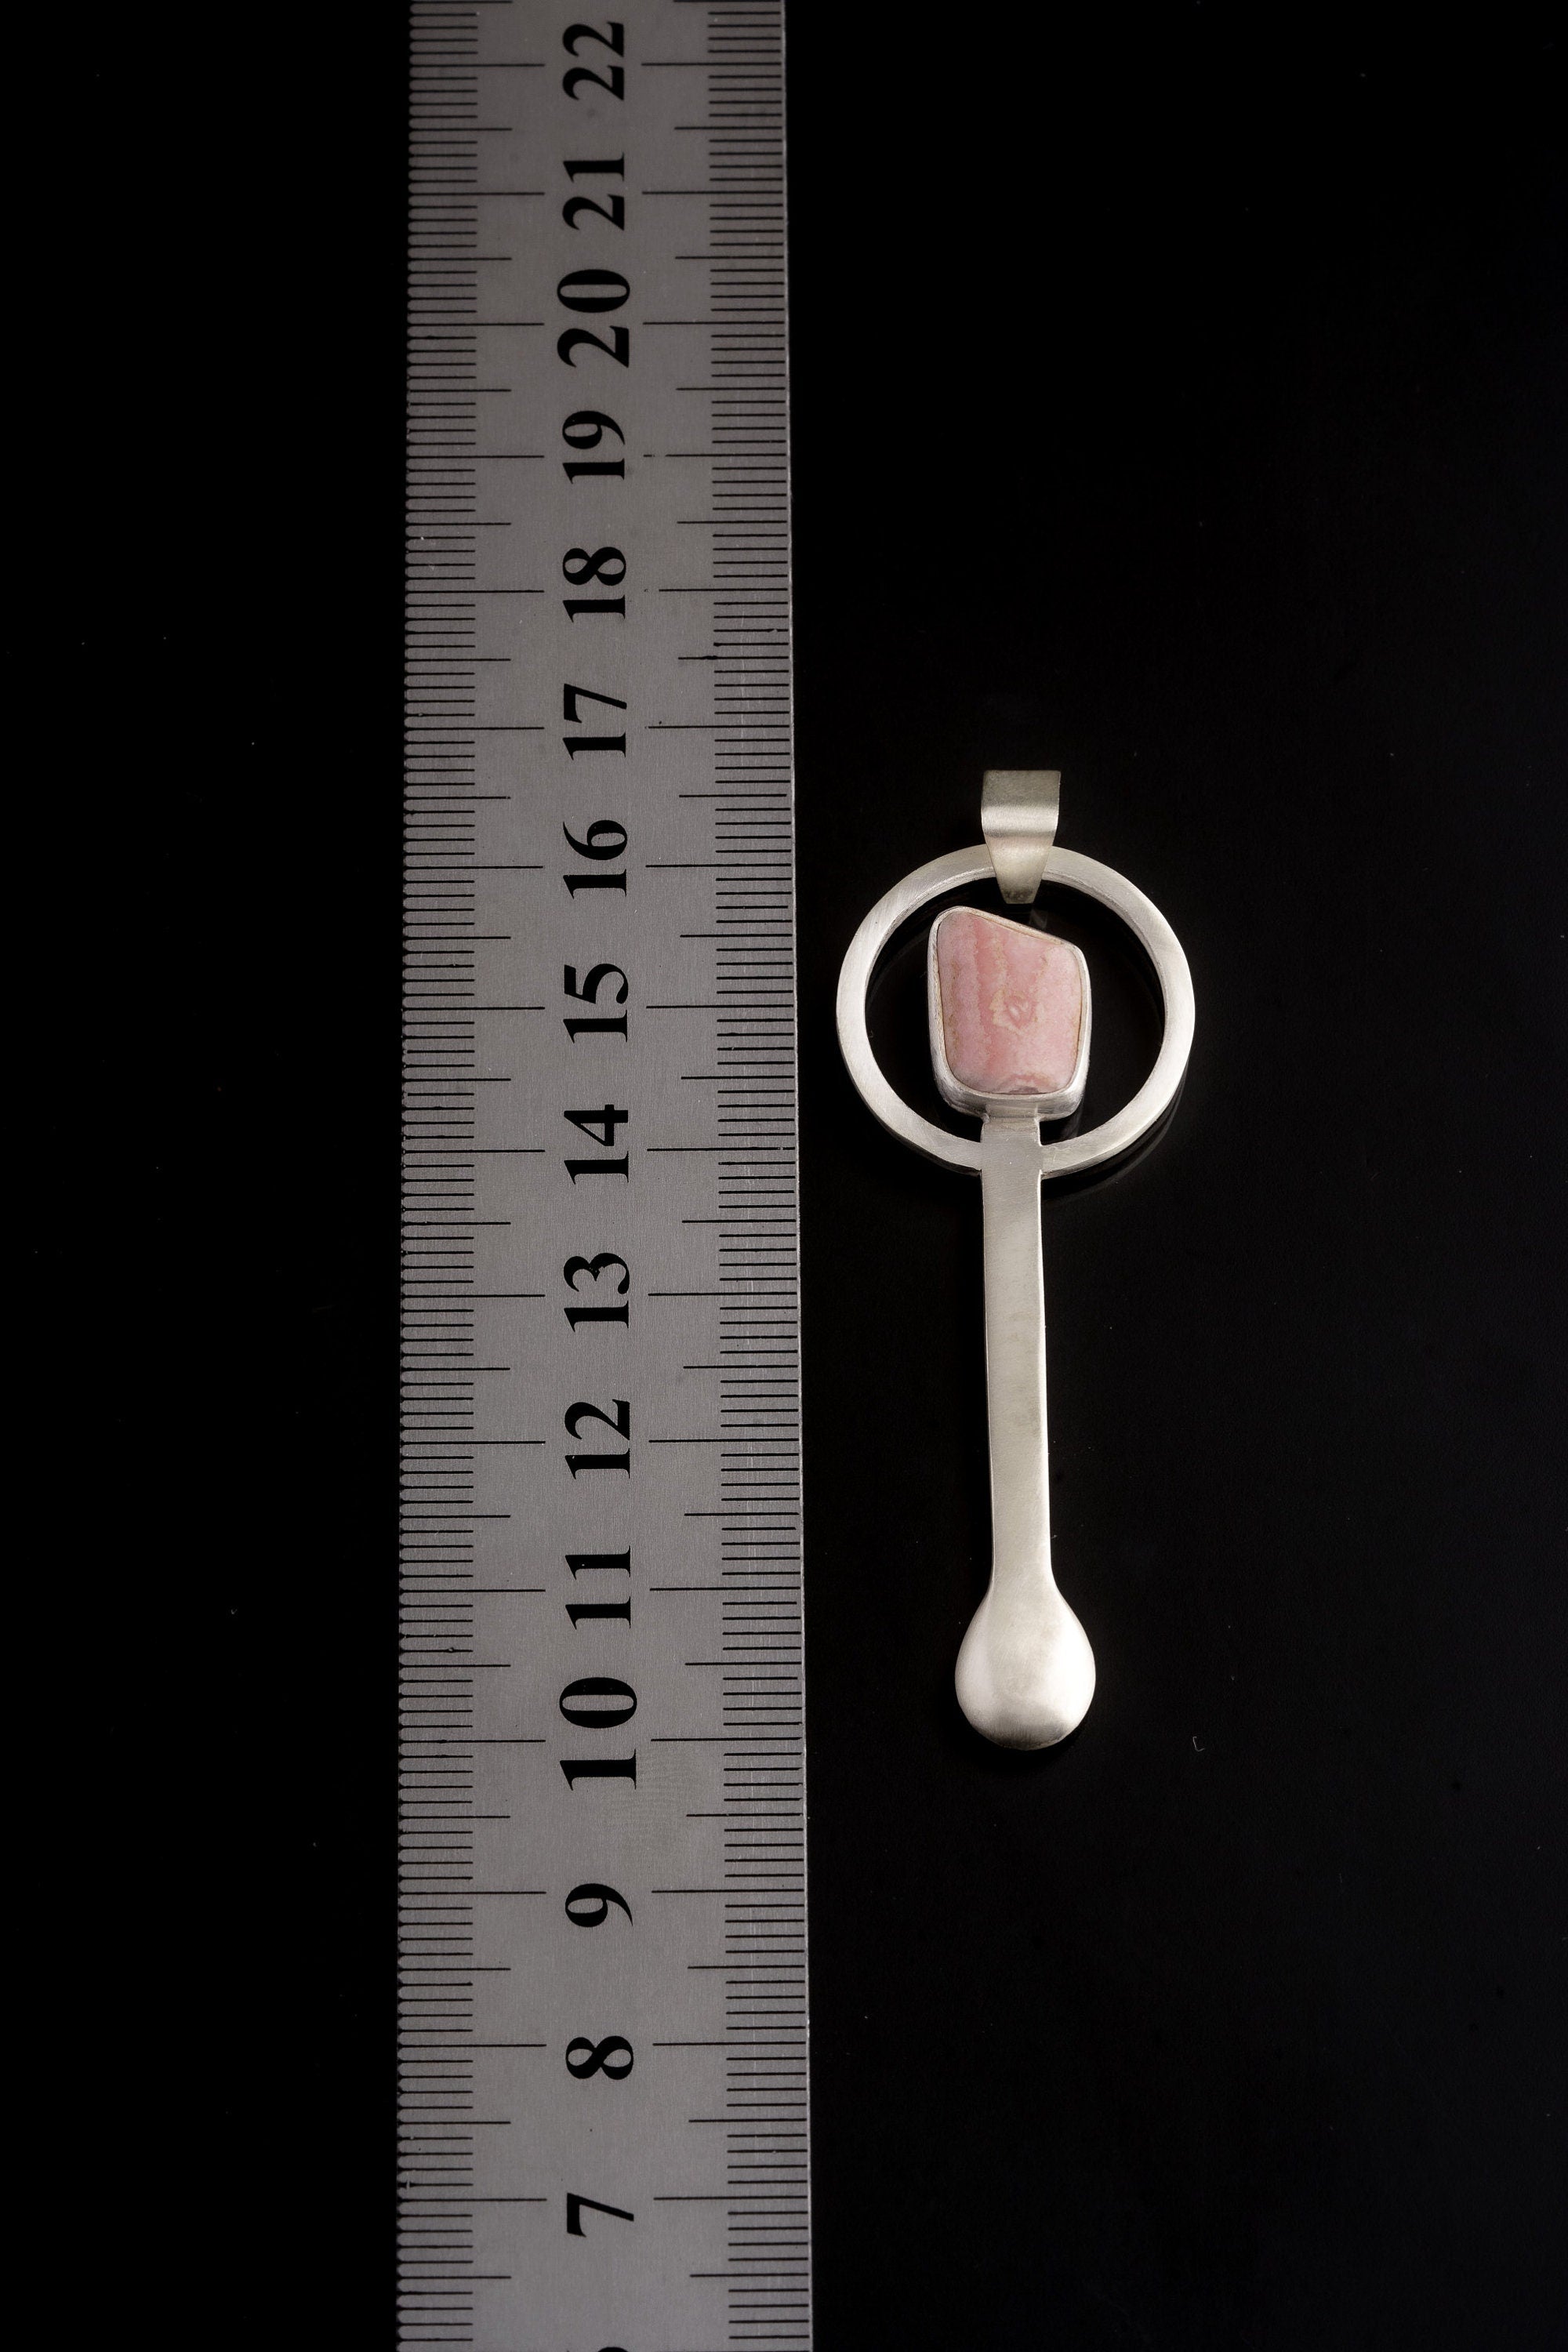 Rhodochrosite - Spice / Ceremonial Spoon - 925 Cast Silver - Unique Hammer Textured - Crystal Pendant Necklace -